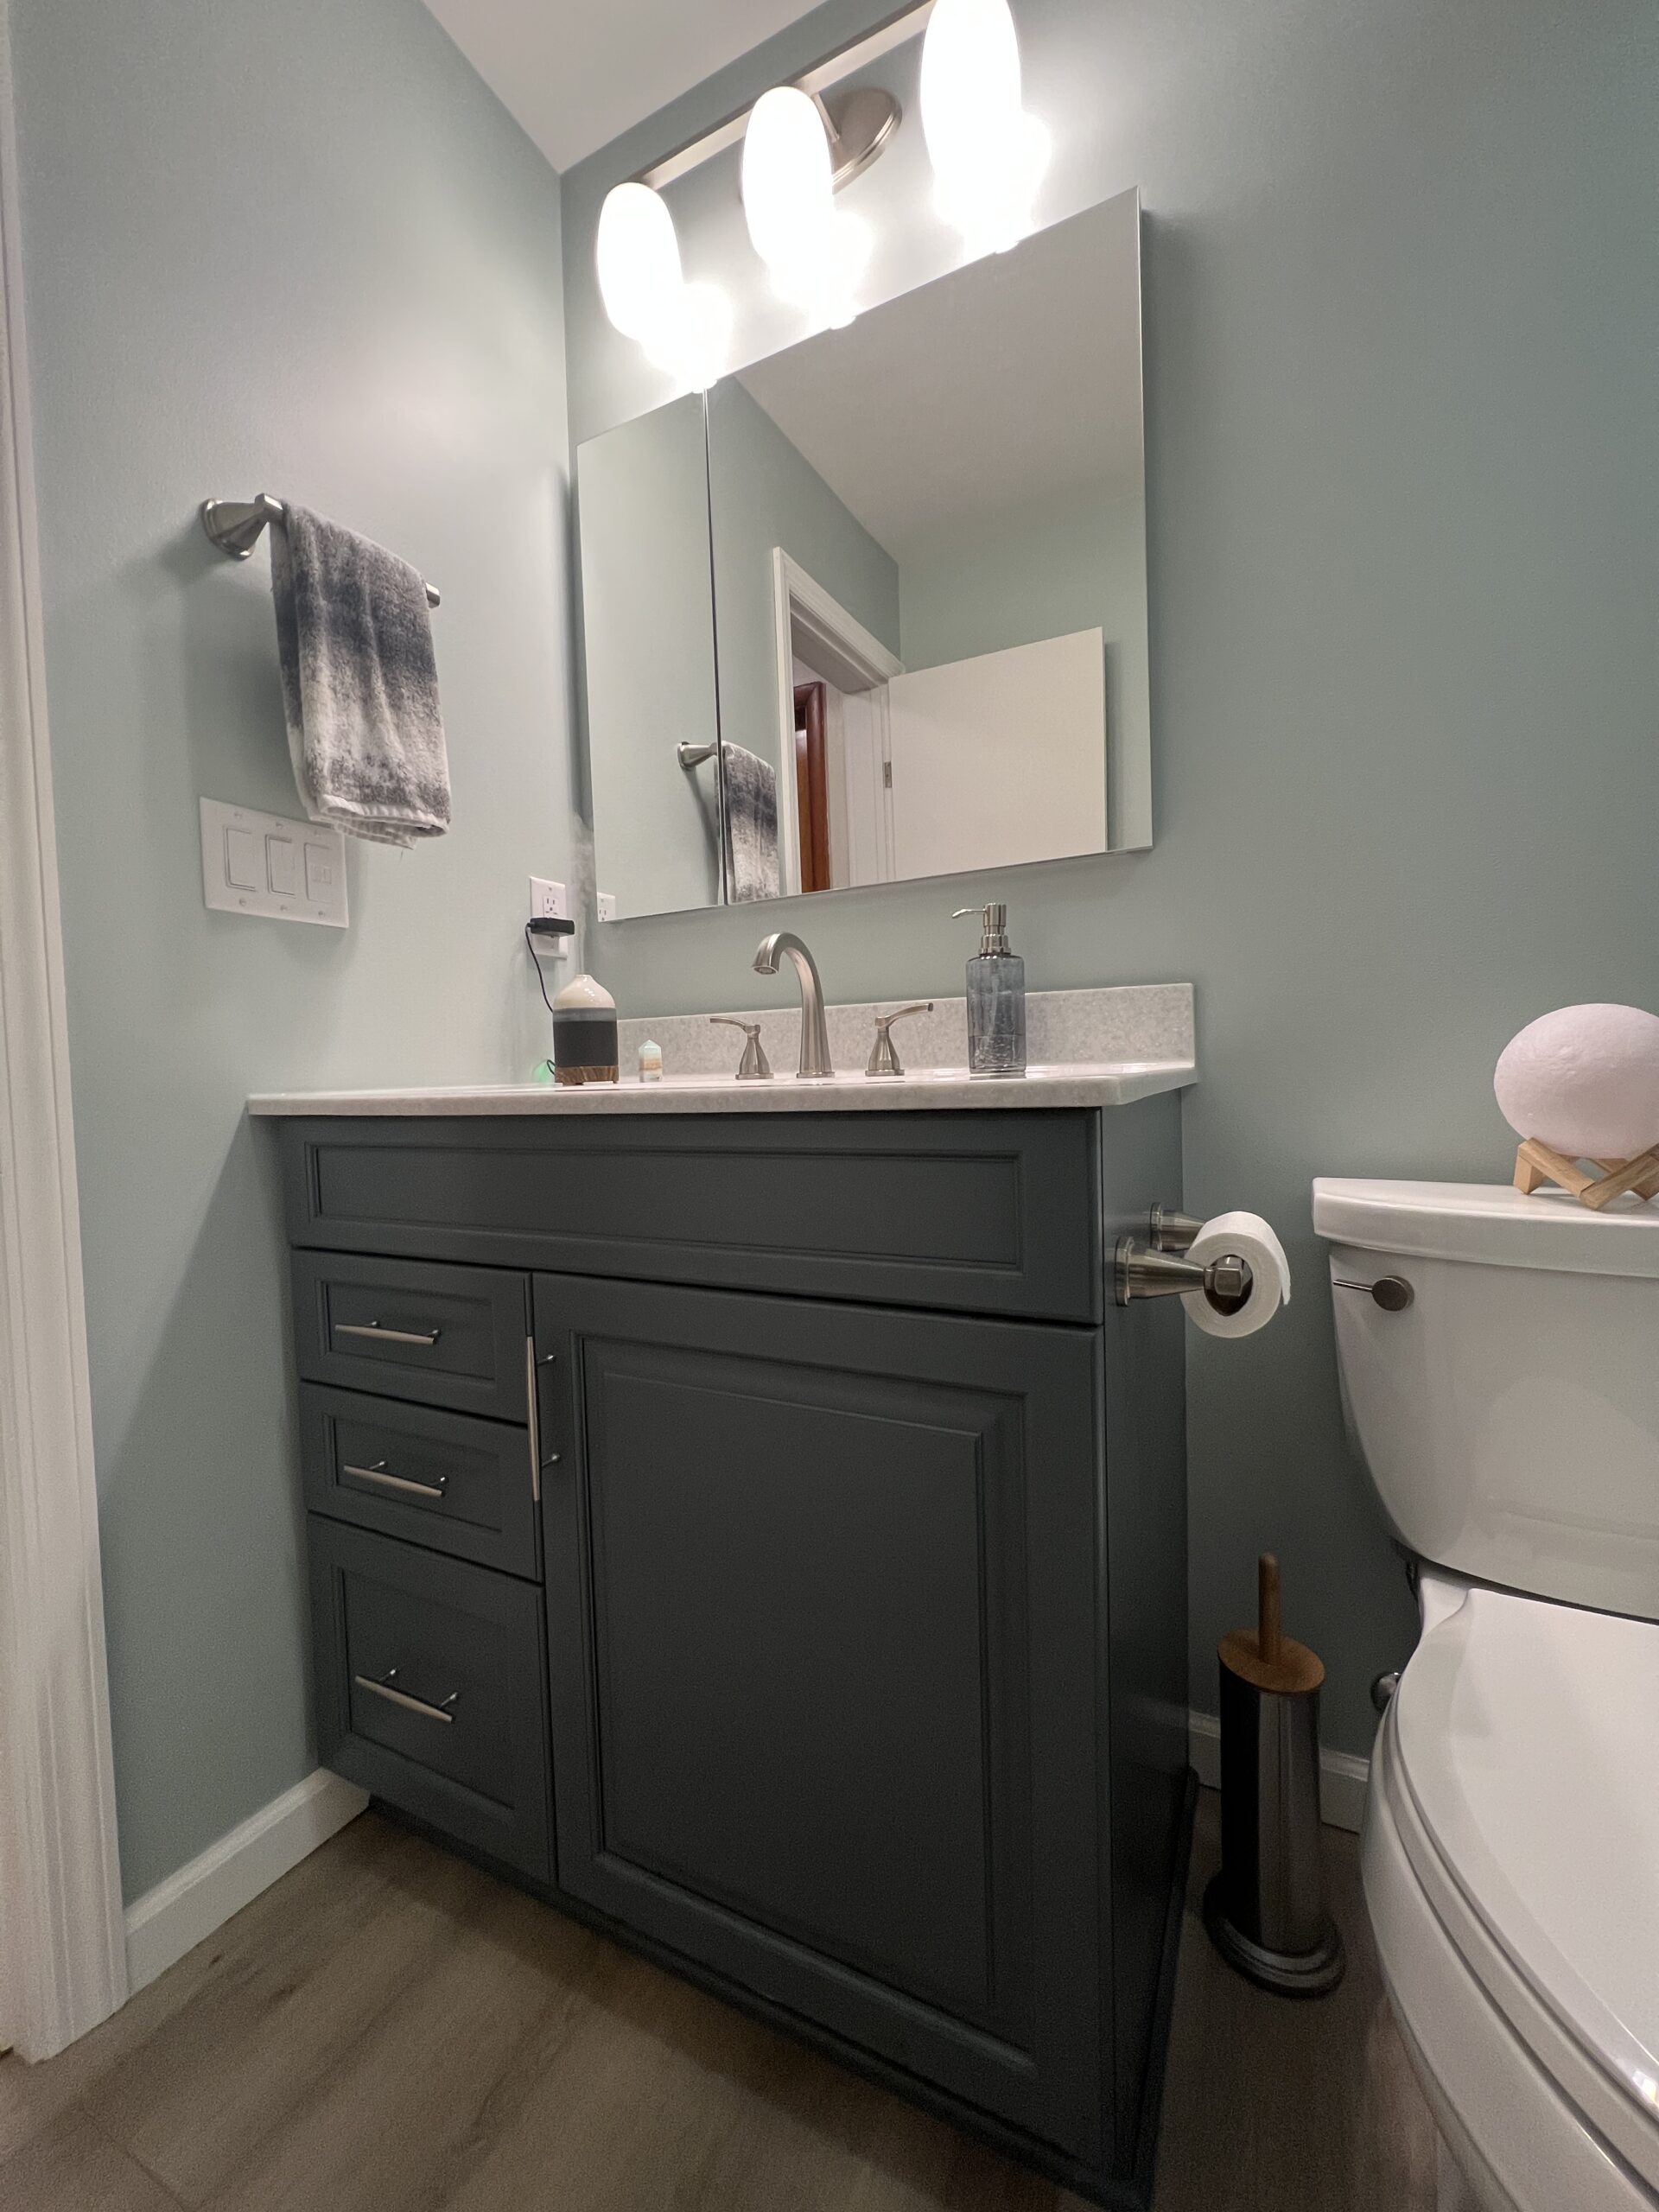 Modern green bathroom, small single single sink, dark cabinet storage, white marble countertop sink toilet